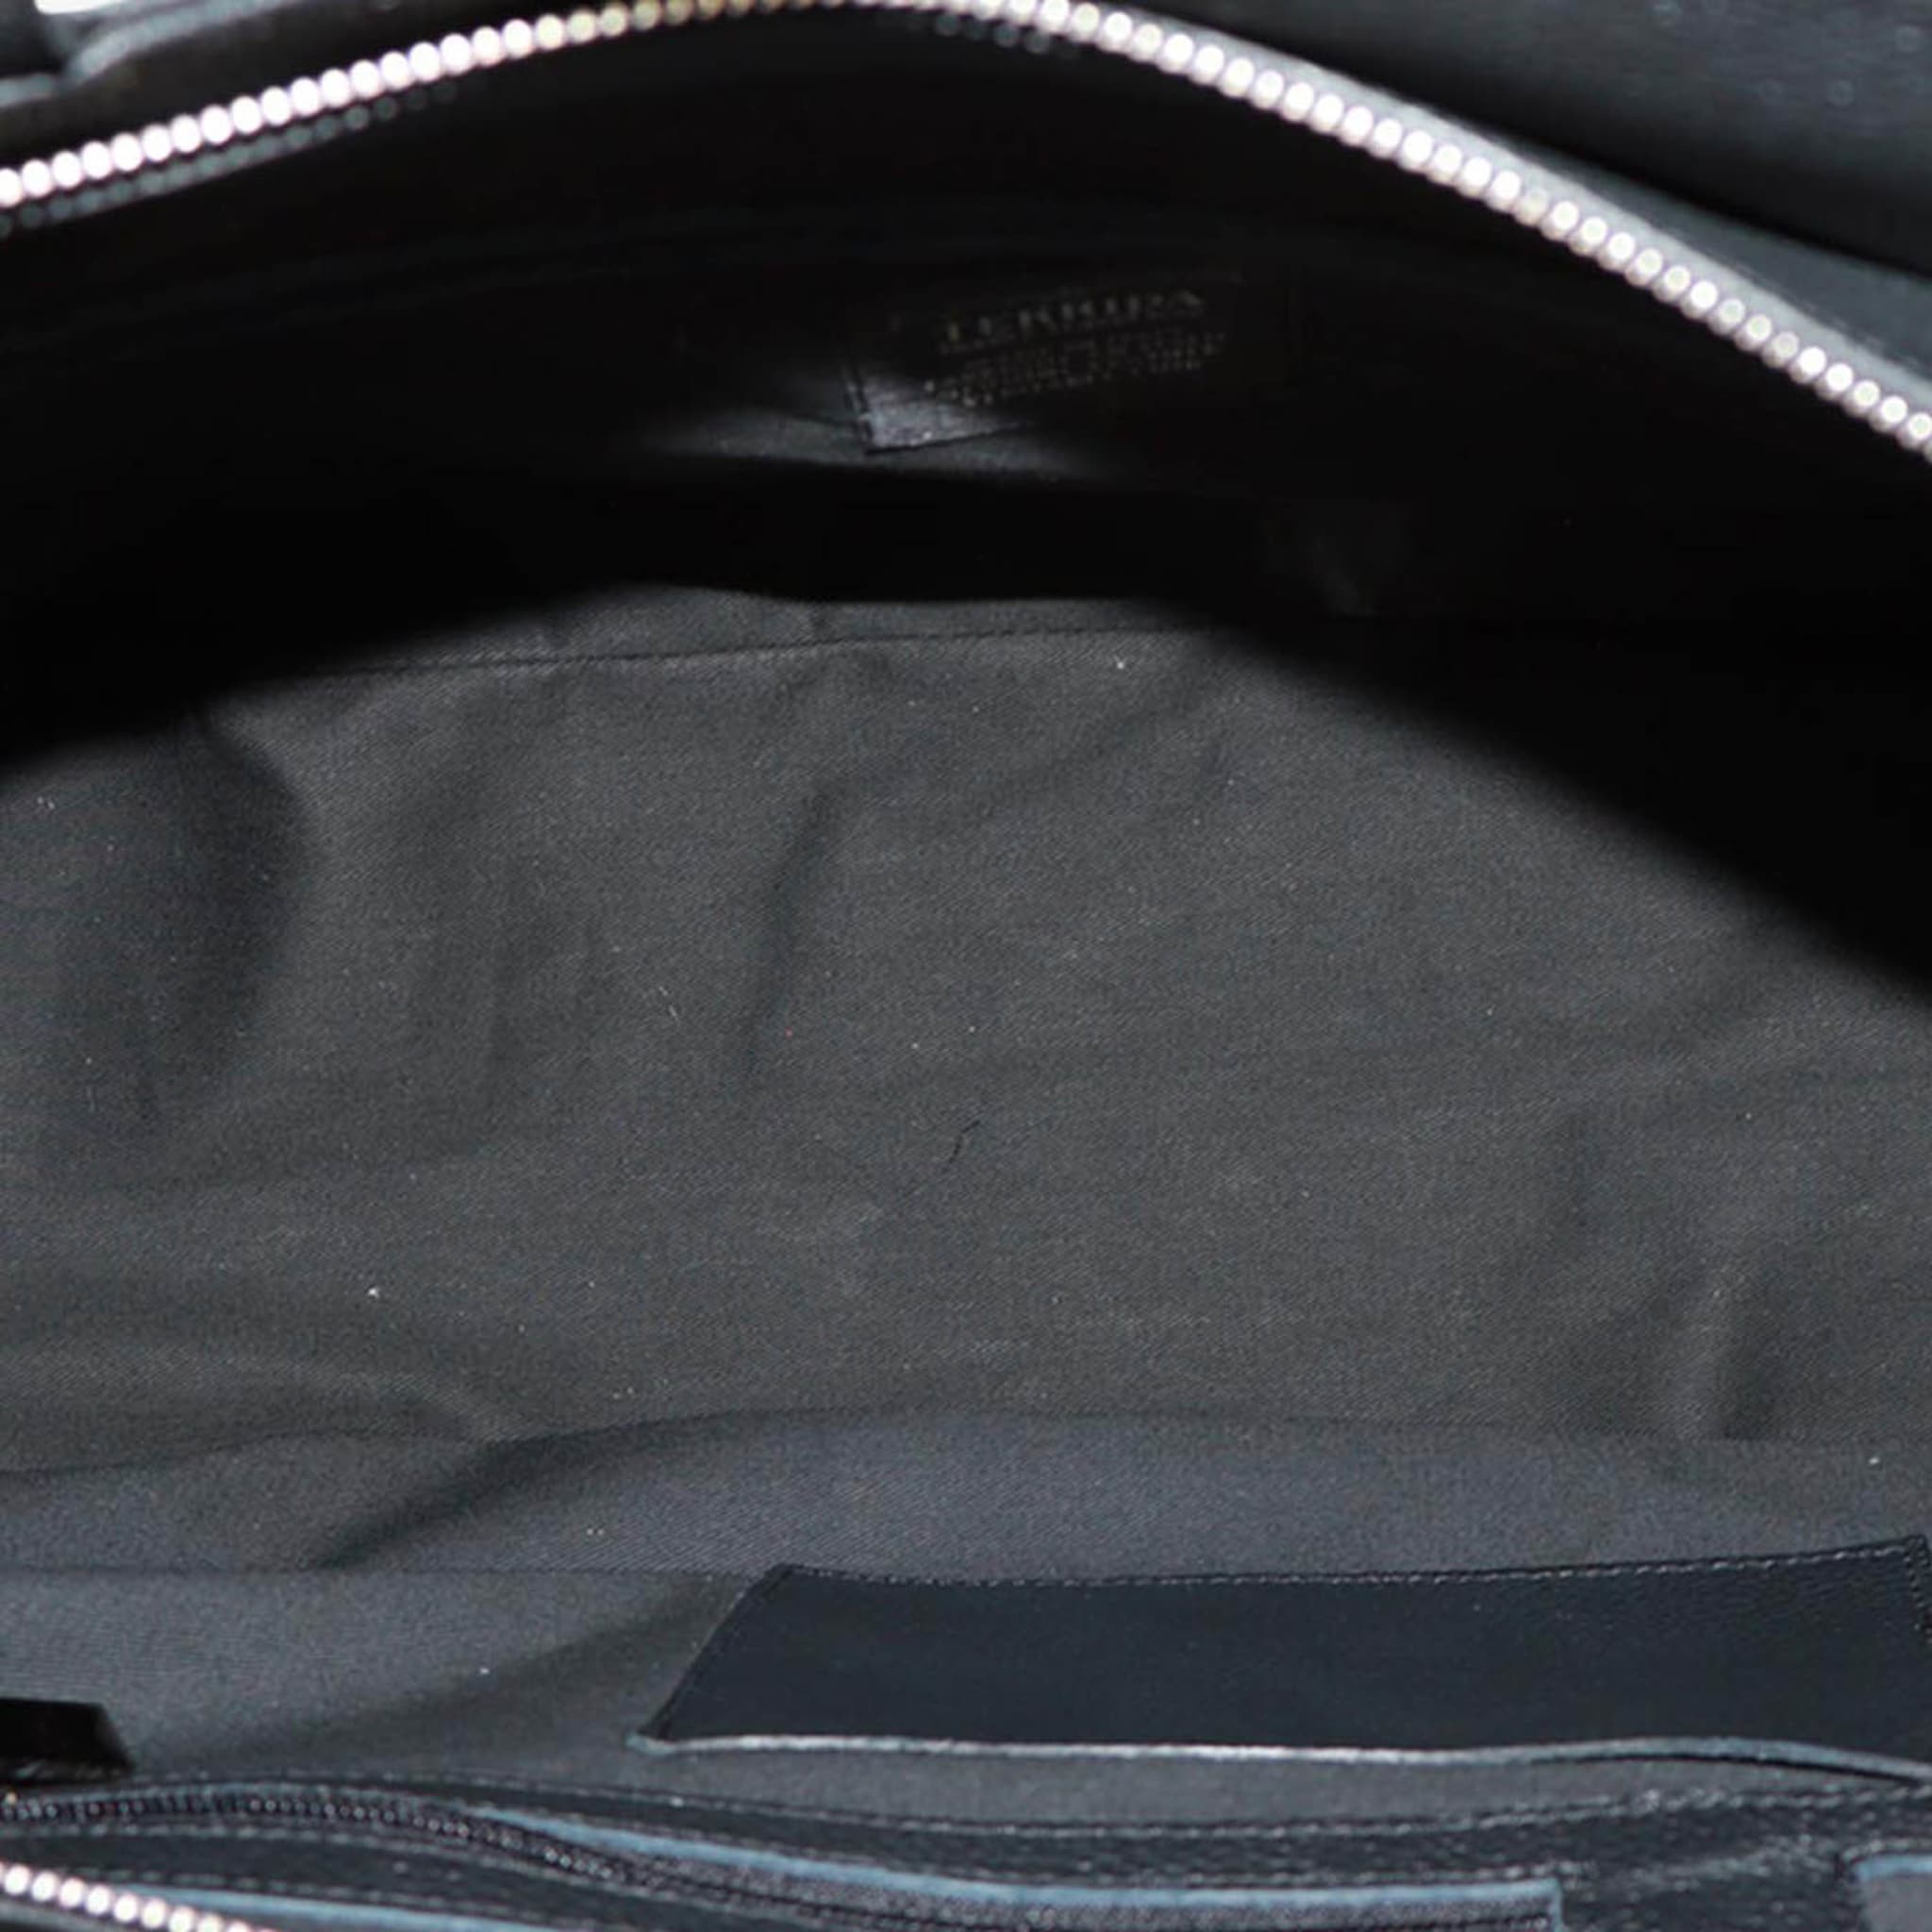 Sport Black & White Bag with Tennis-Racket-Shaped Pocket - Alternative view 3